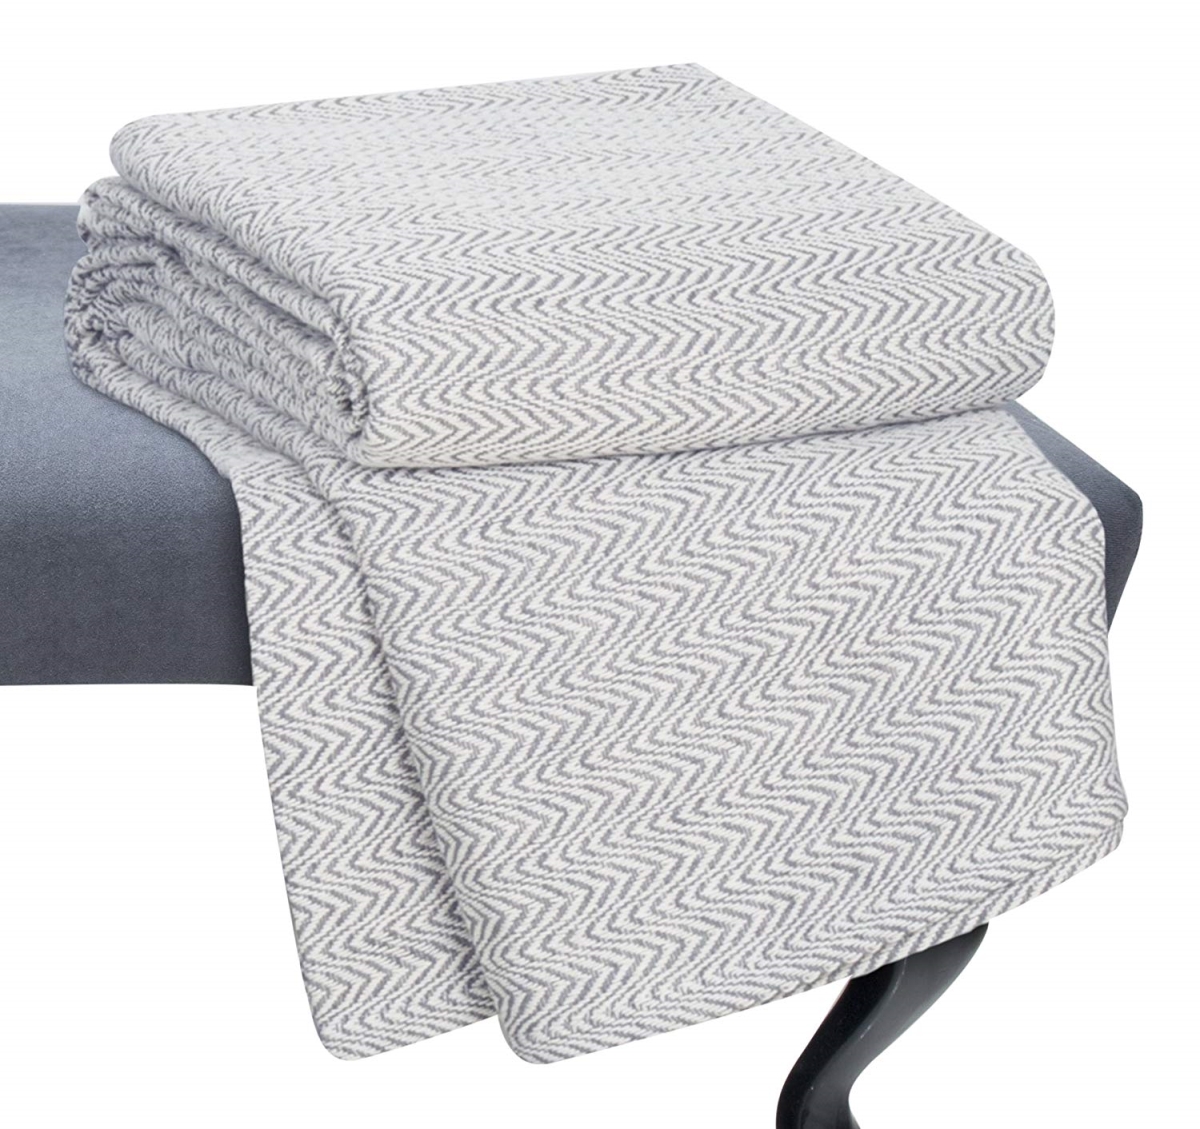 61a-26578 Chevron 100 Percent Egyptian Cotton Blanket - Twin Size - Charcoal